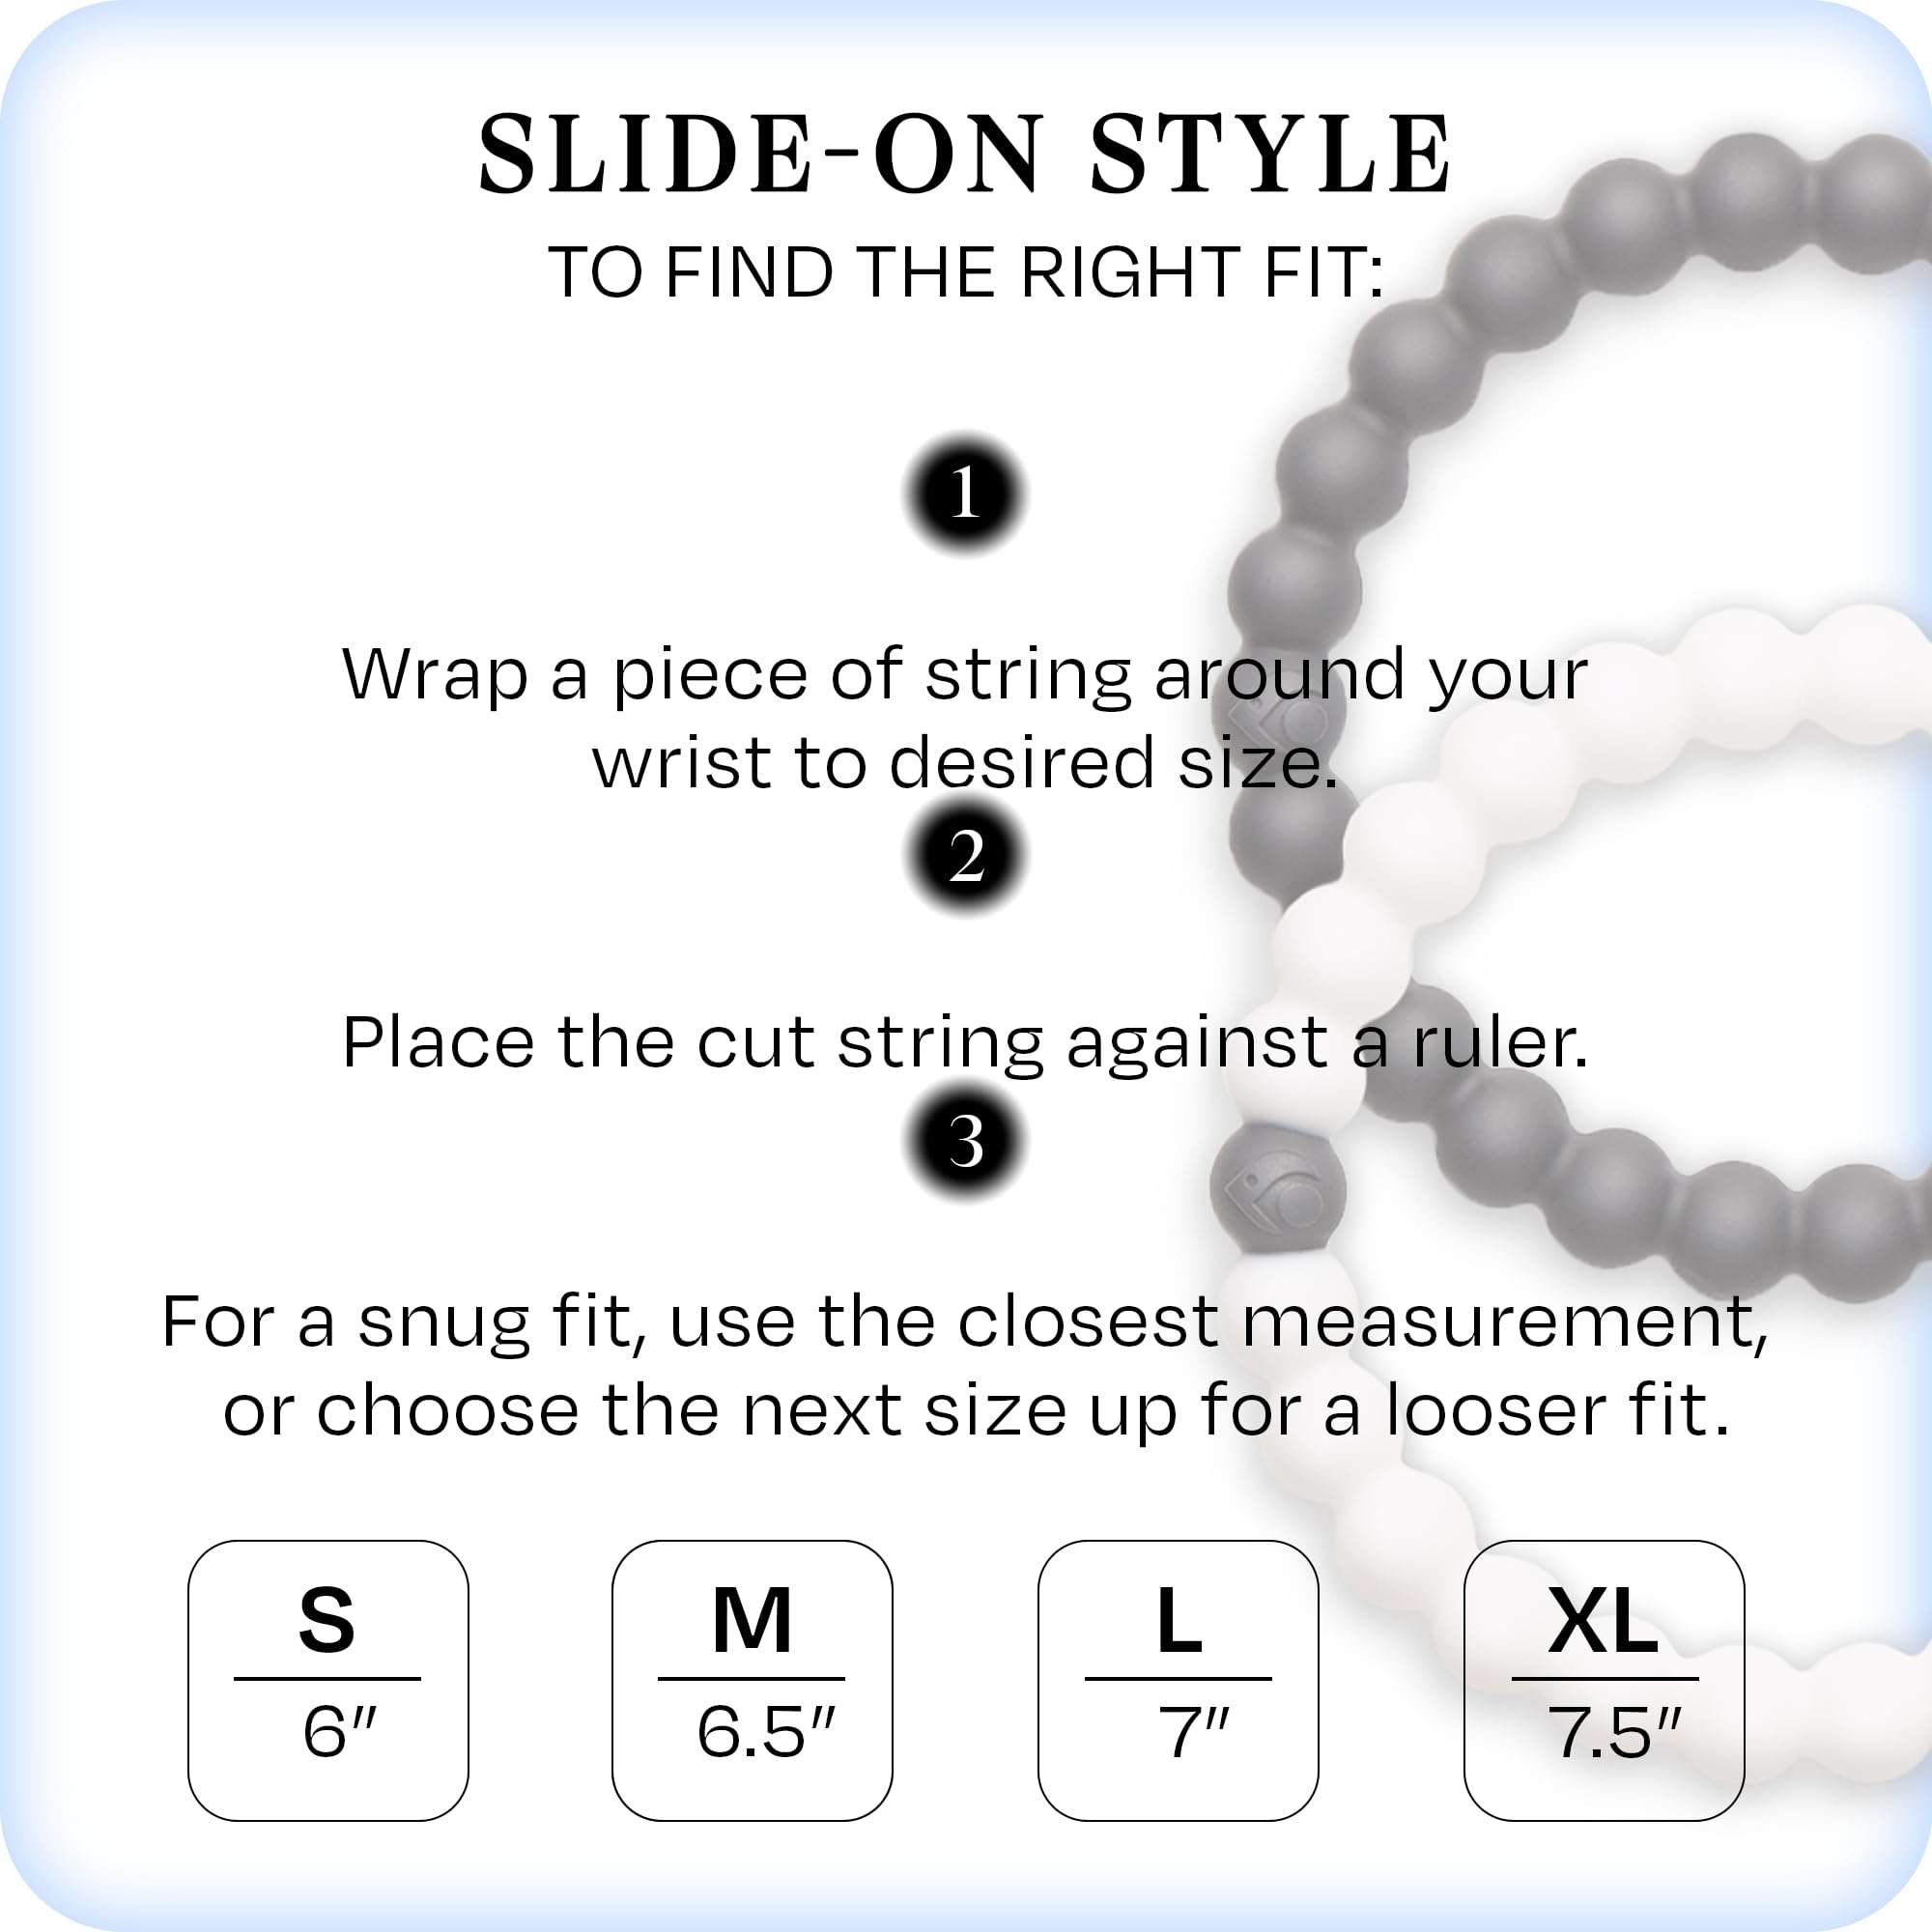 Lokai Silicone Beaded Bracelets for Women & Men - Couples Bracelets, Black & White Matching Bracelets - Silicone Jewelry Fashion Bracelet Slides-On for Comfortable Fit